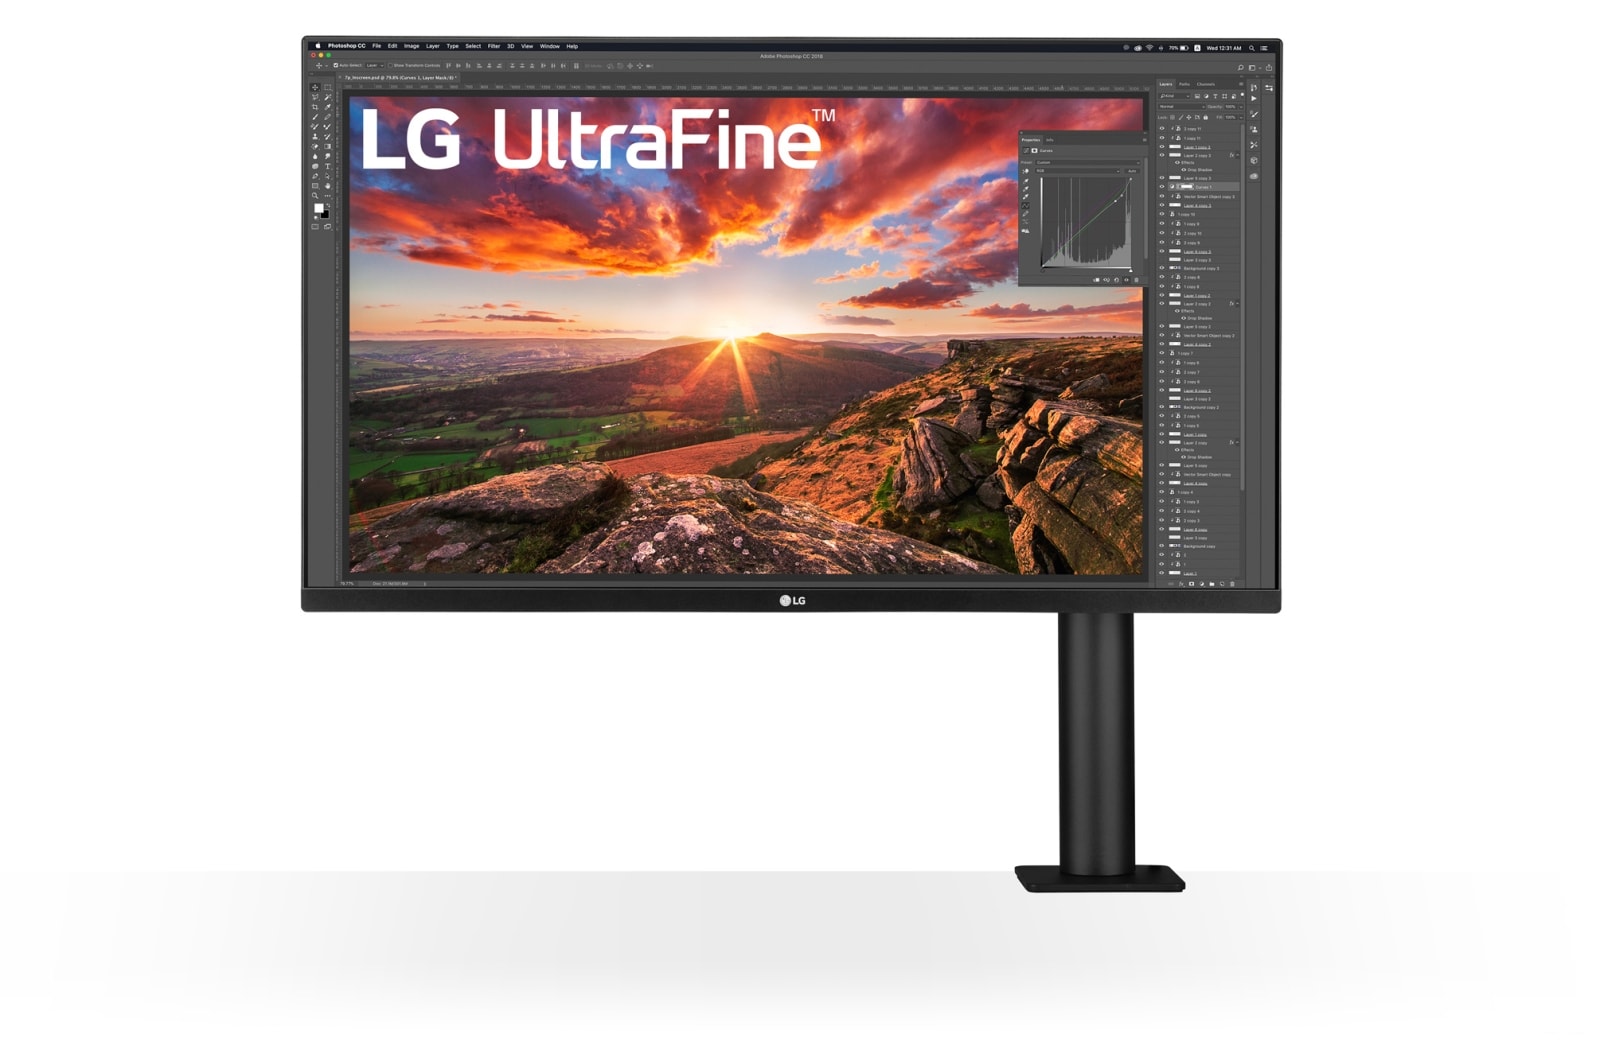 LG UltraFine Display Ergo 32UN880